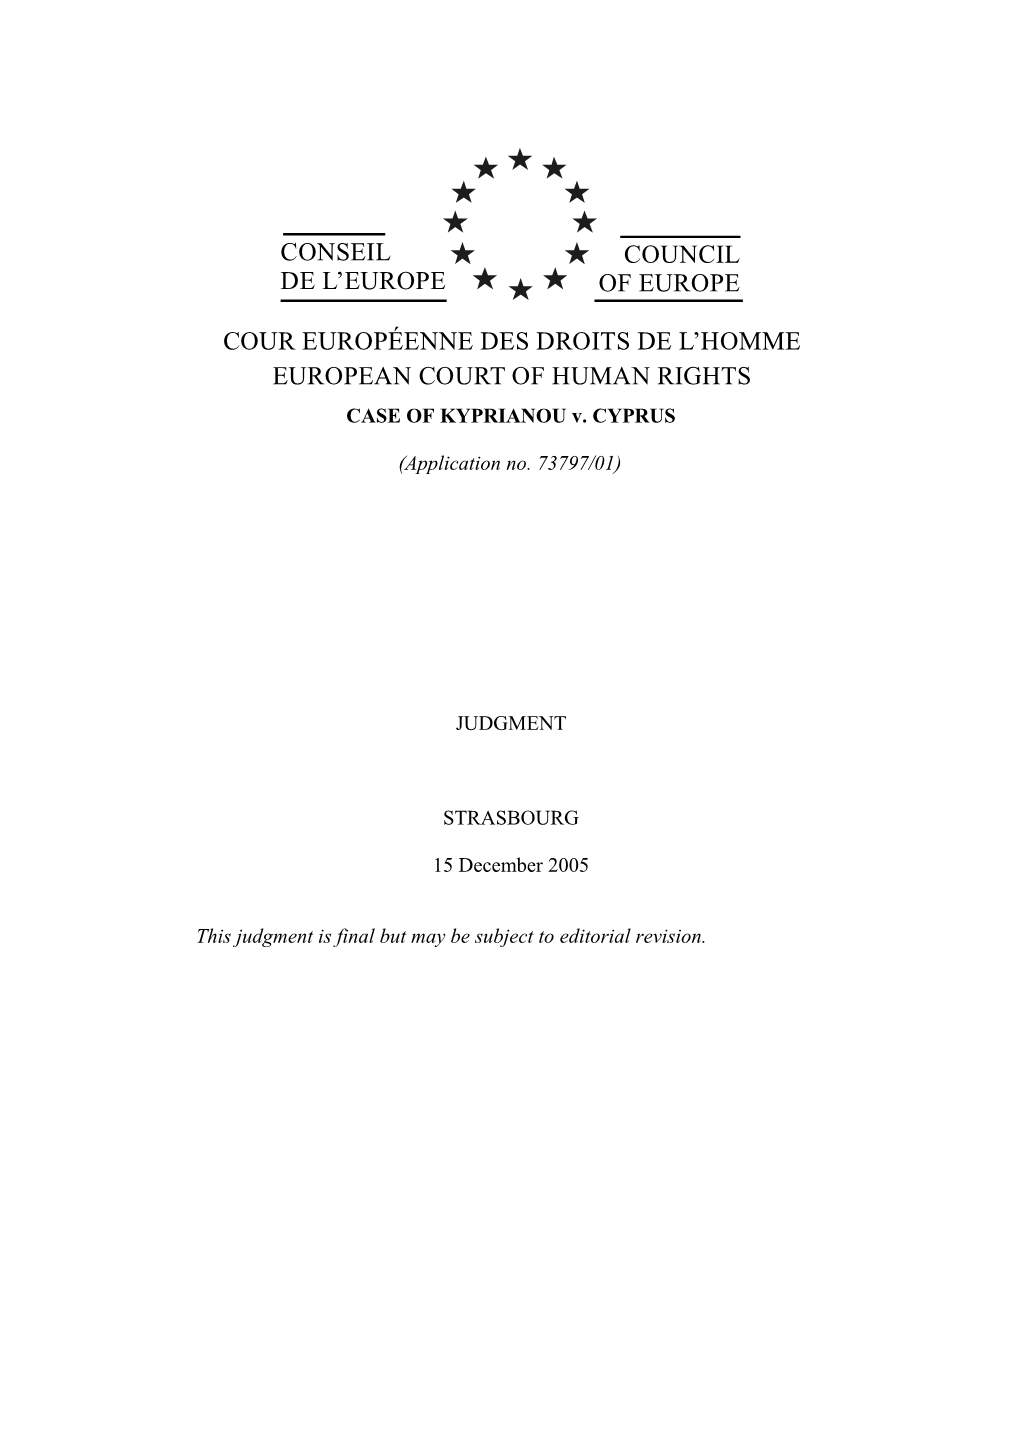 CASE of KYPRIANOU V. CYPRUS